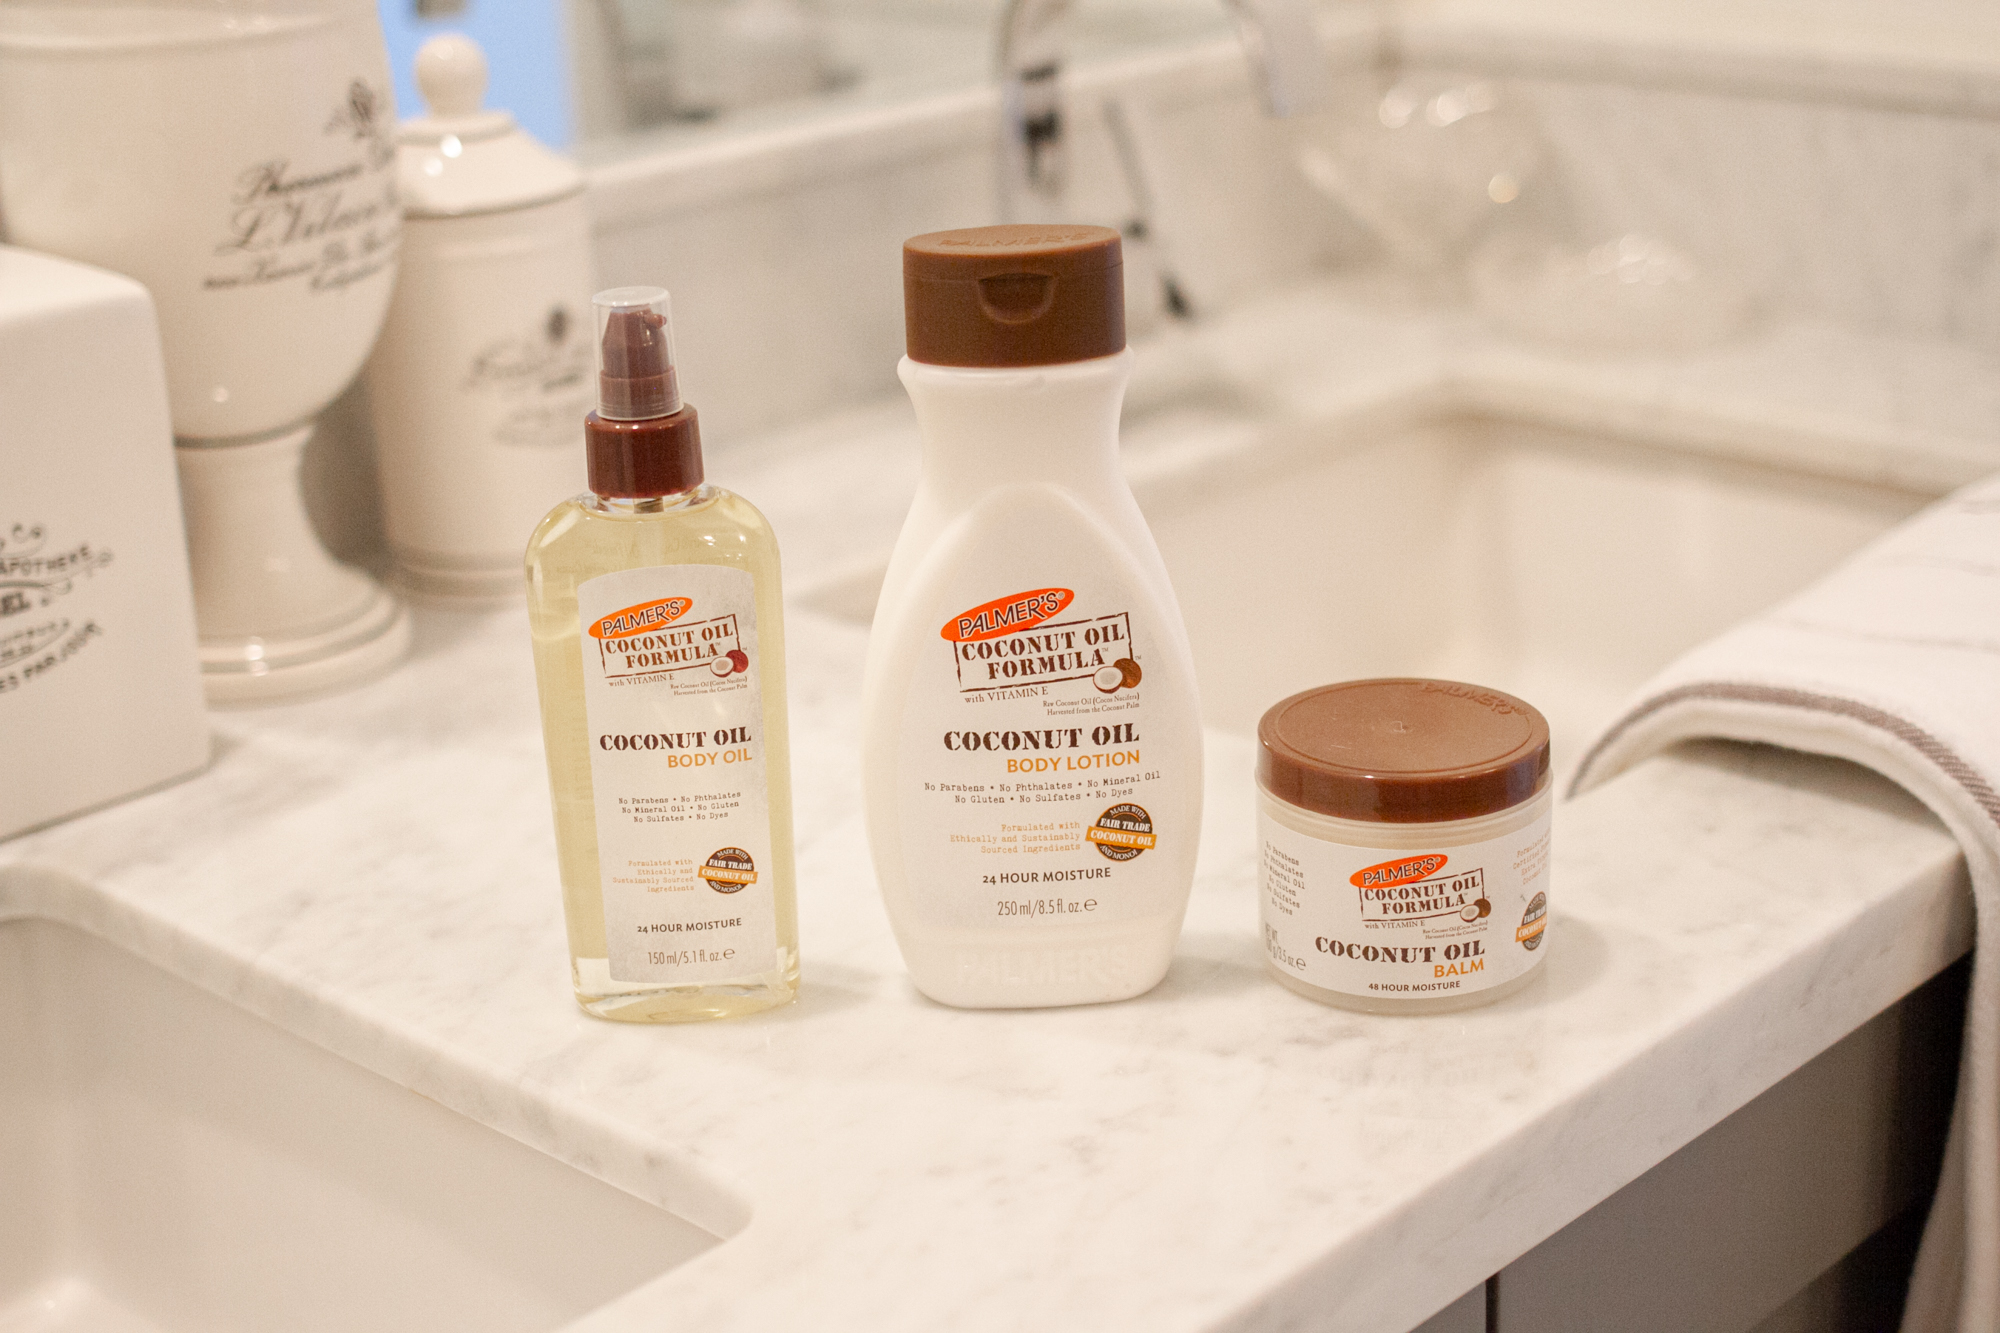 Palmer's Coconut Oil Formula winter skin care products in bathroom